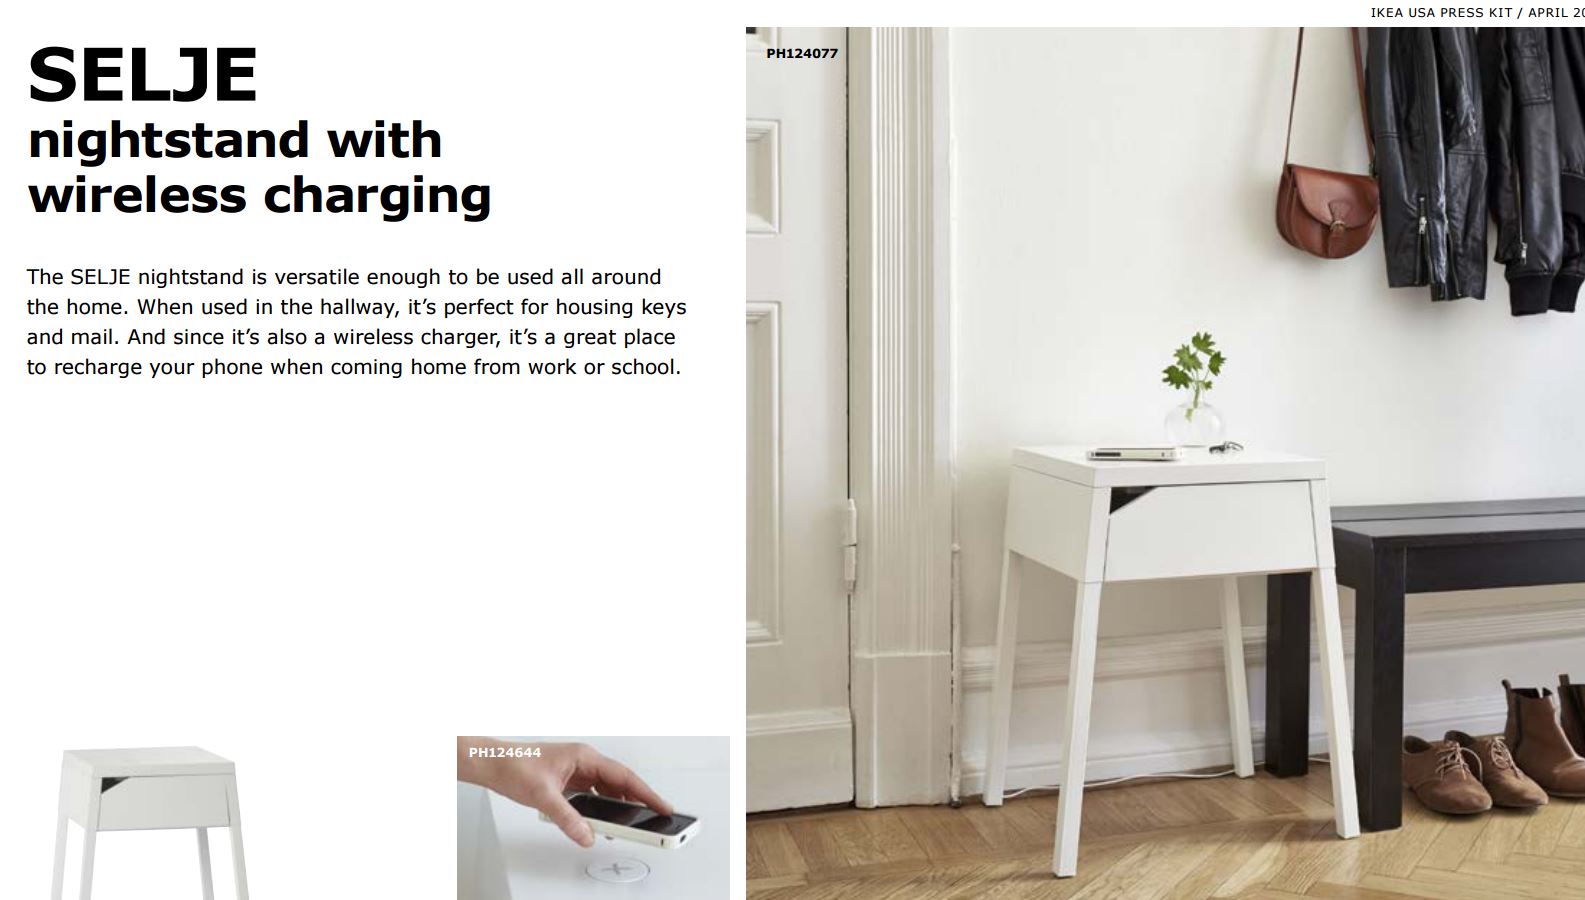 wireless-charging-002-IKEA